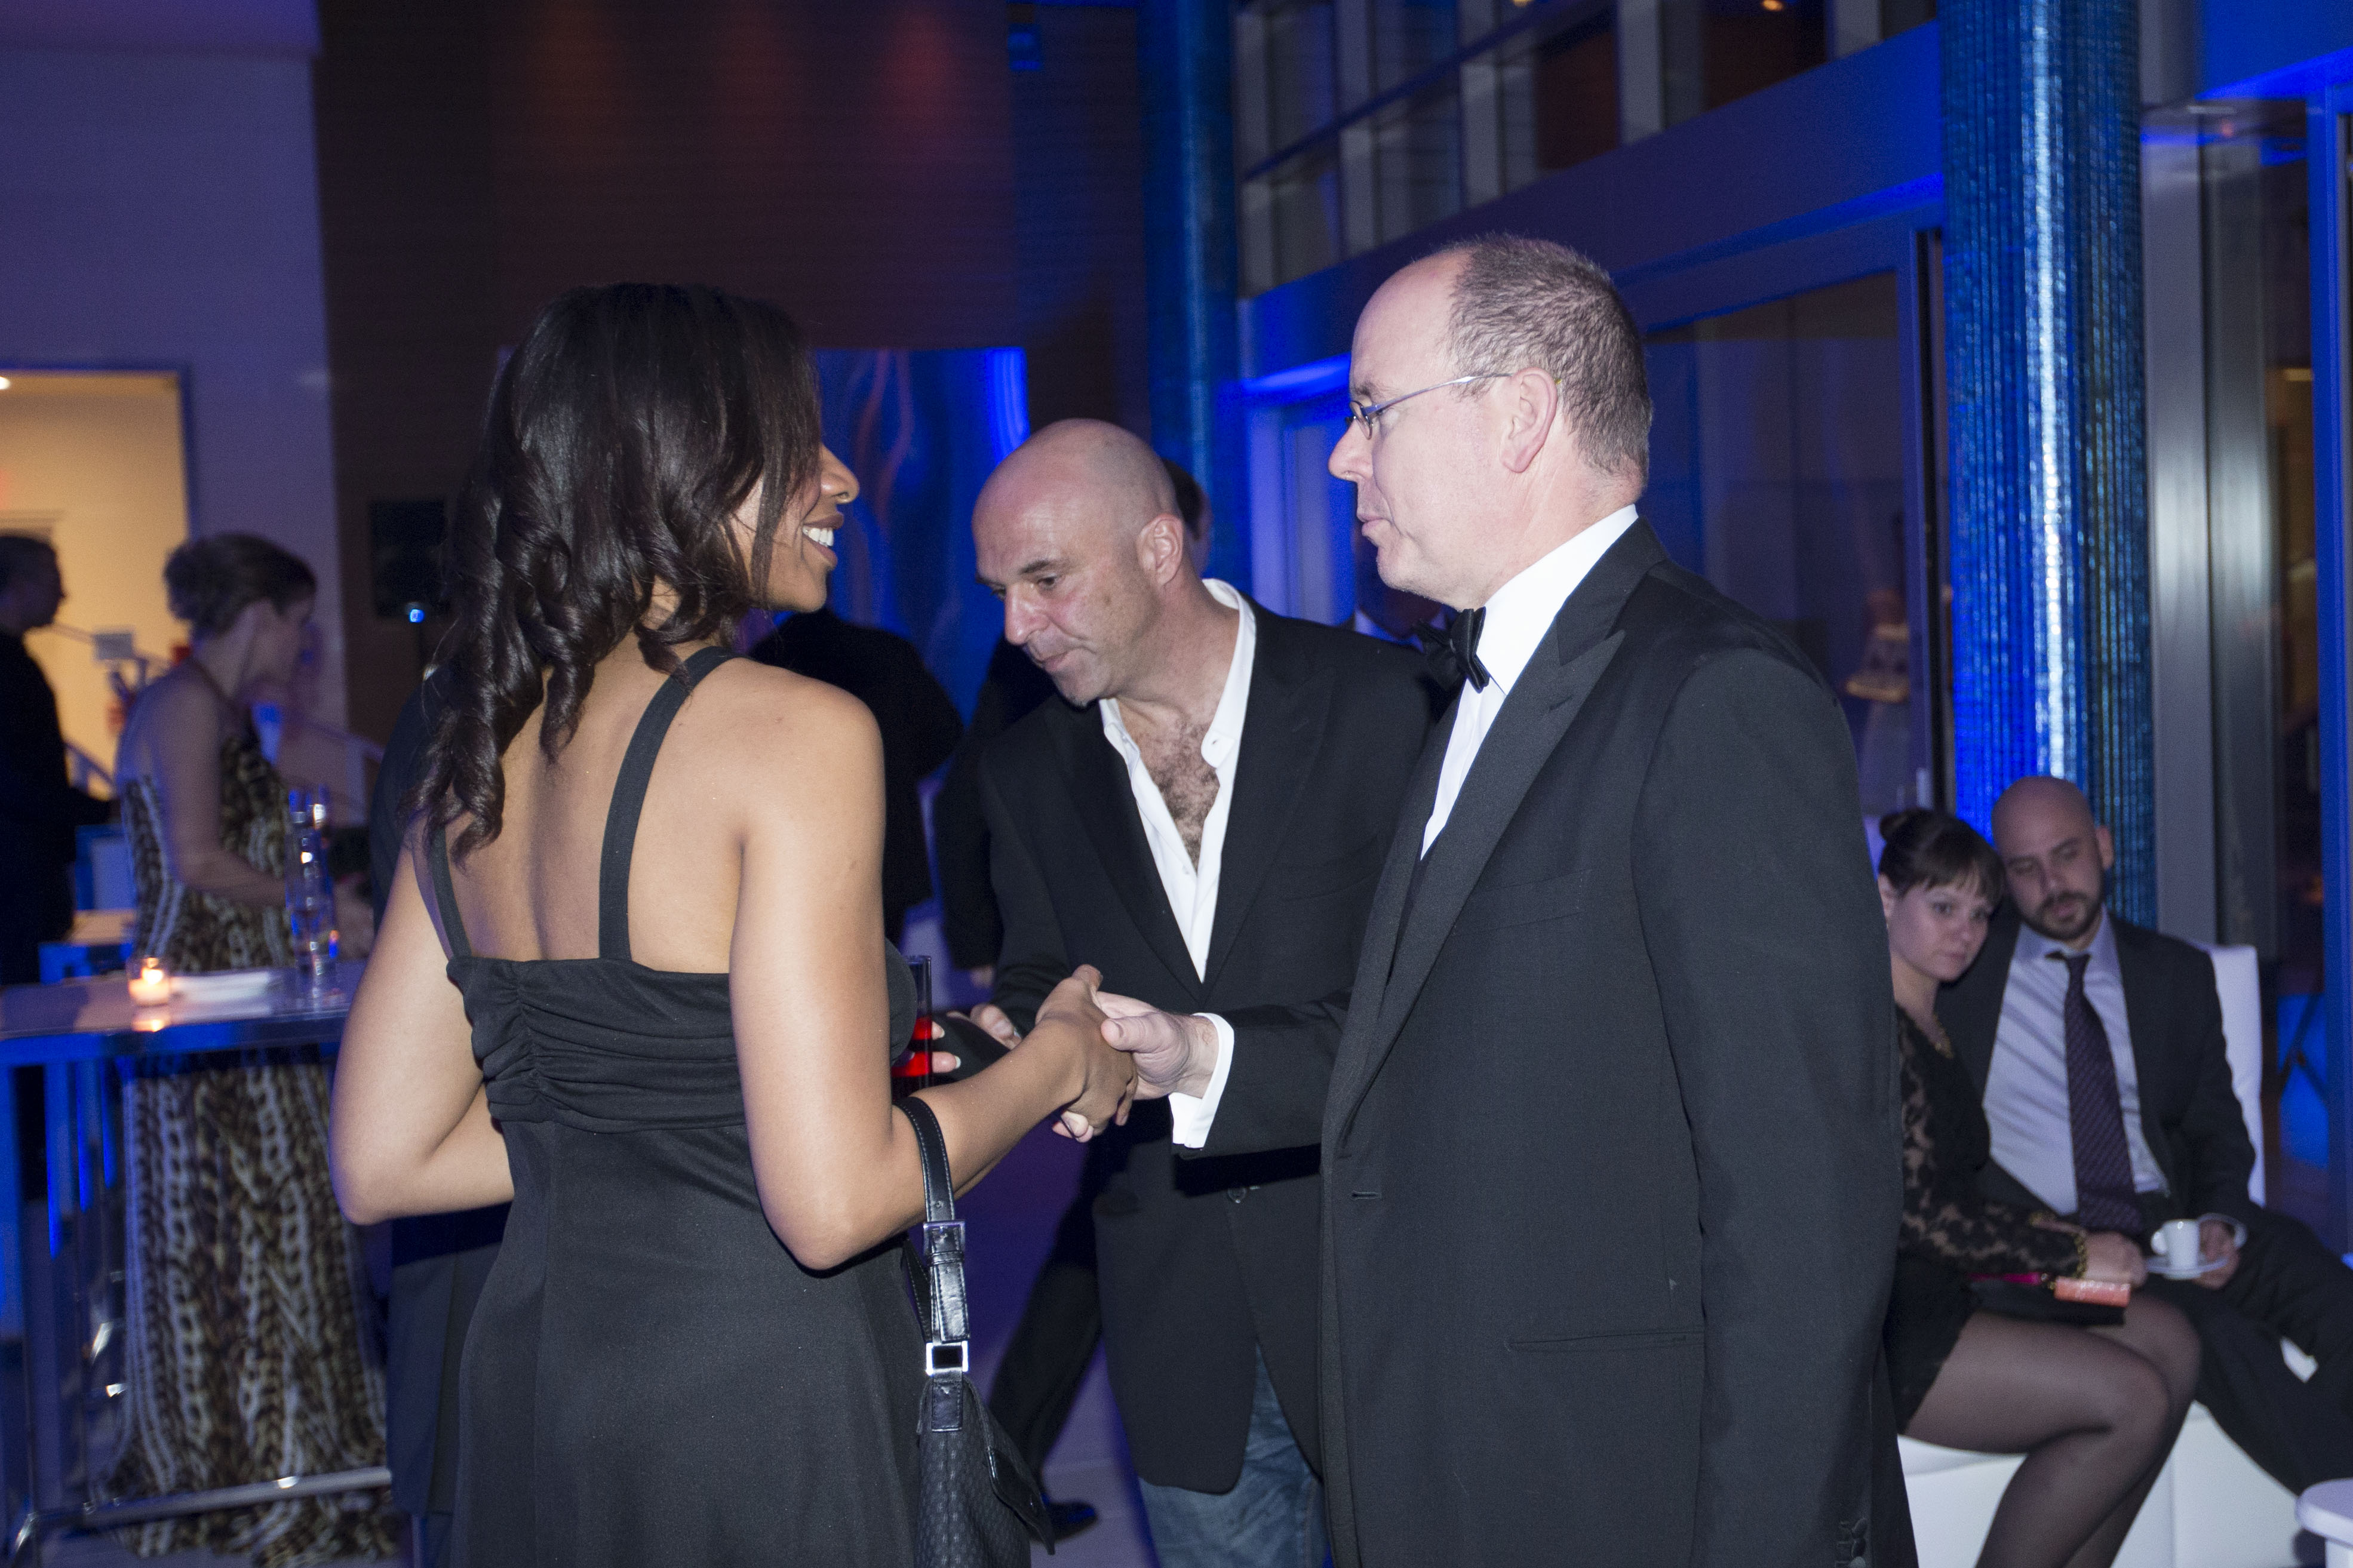 Meeting His Serene Highness Prince Albert II of Monaco @ the Ritz-Carlton Montreal Centennial Gala Oct. 26th, 2012